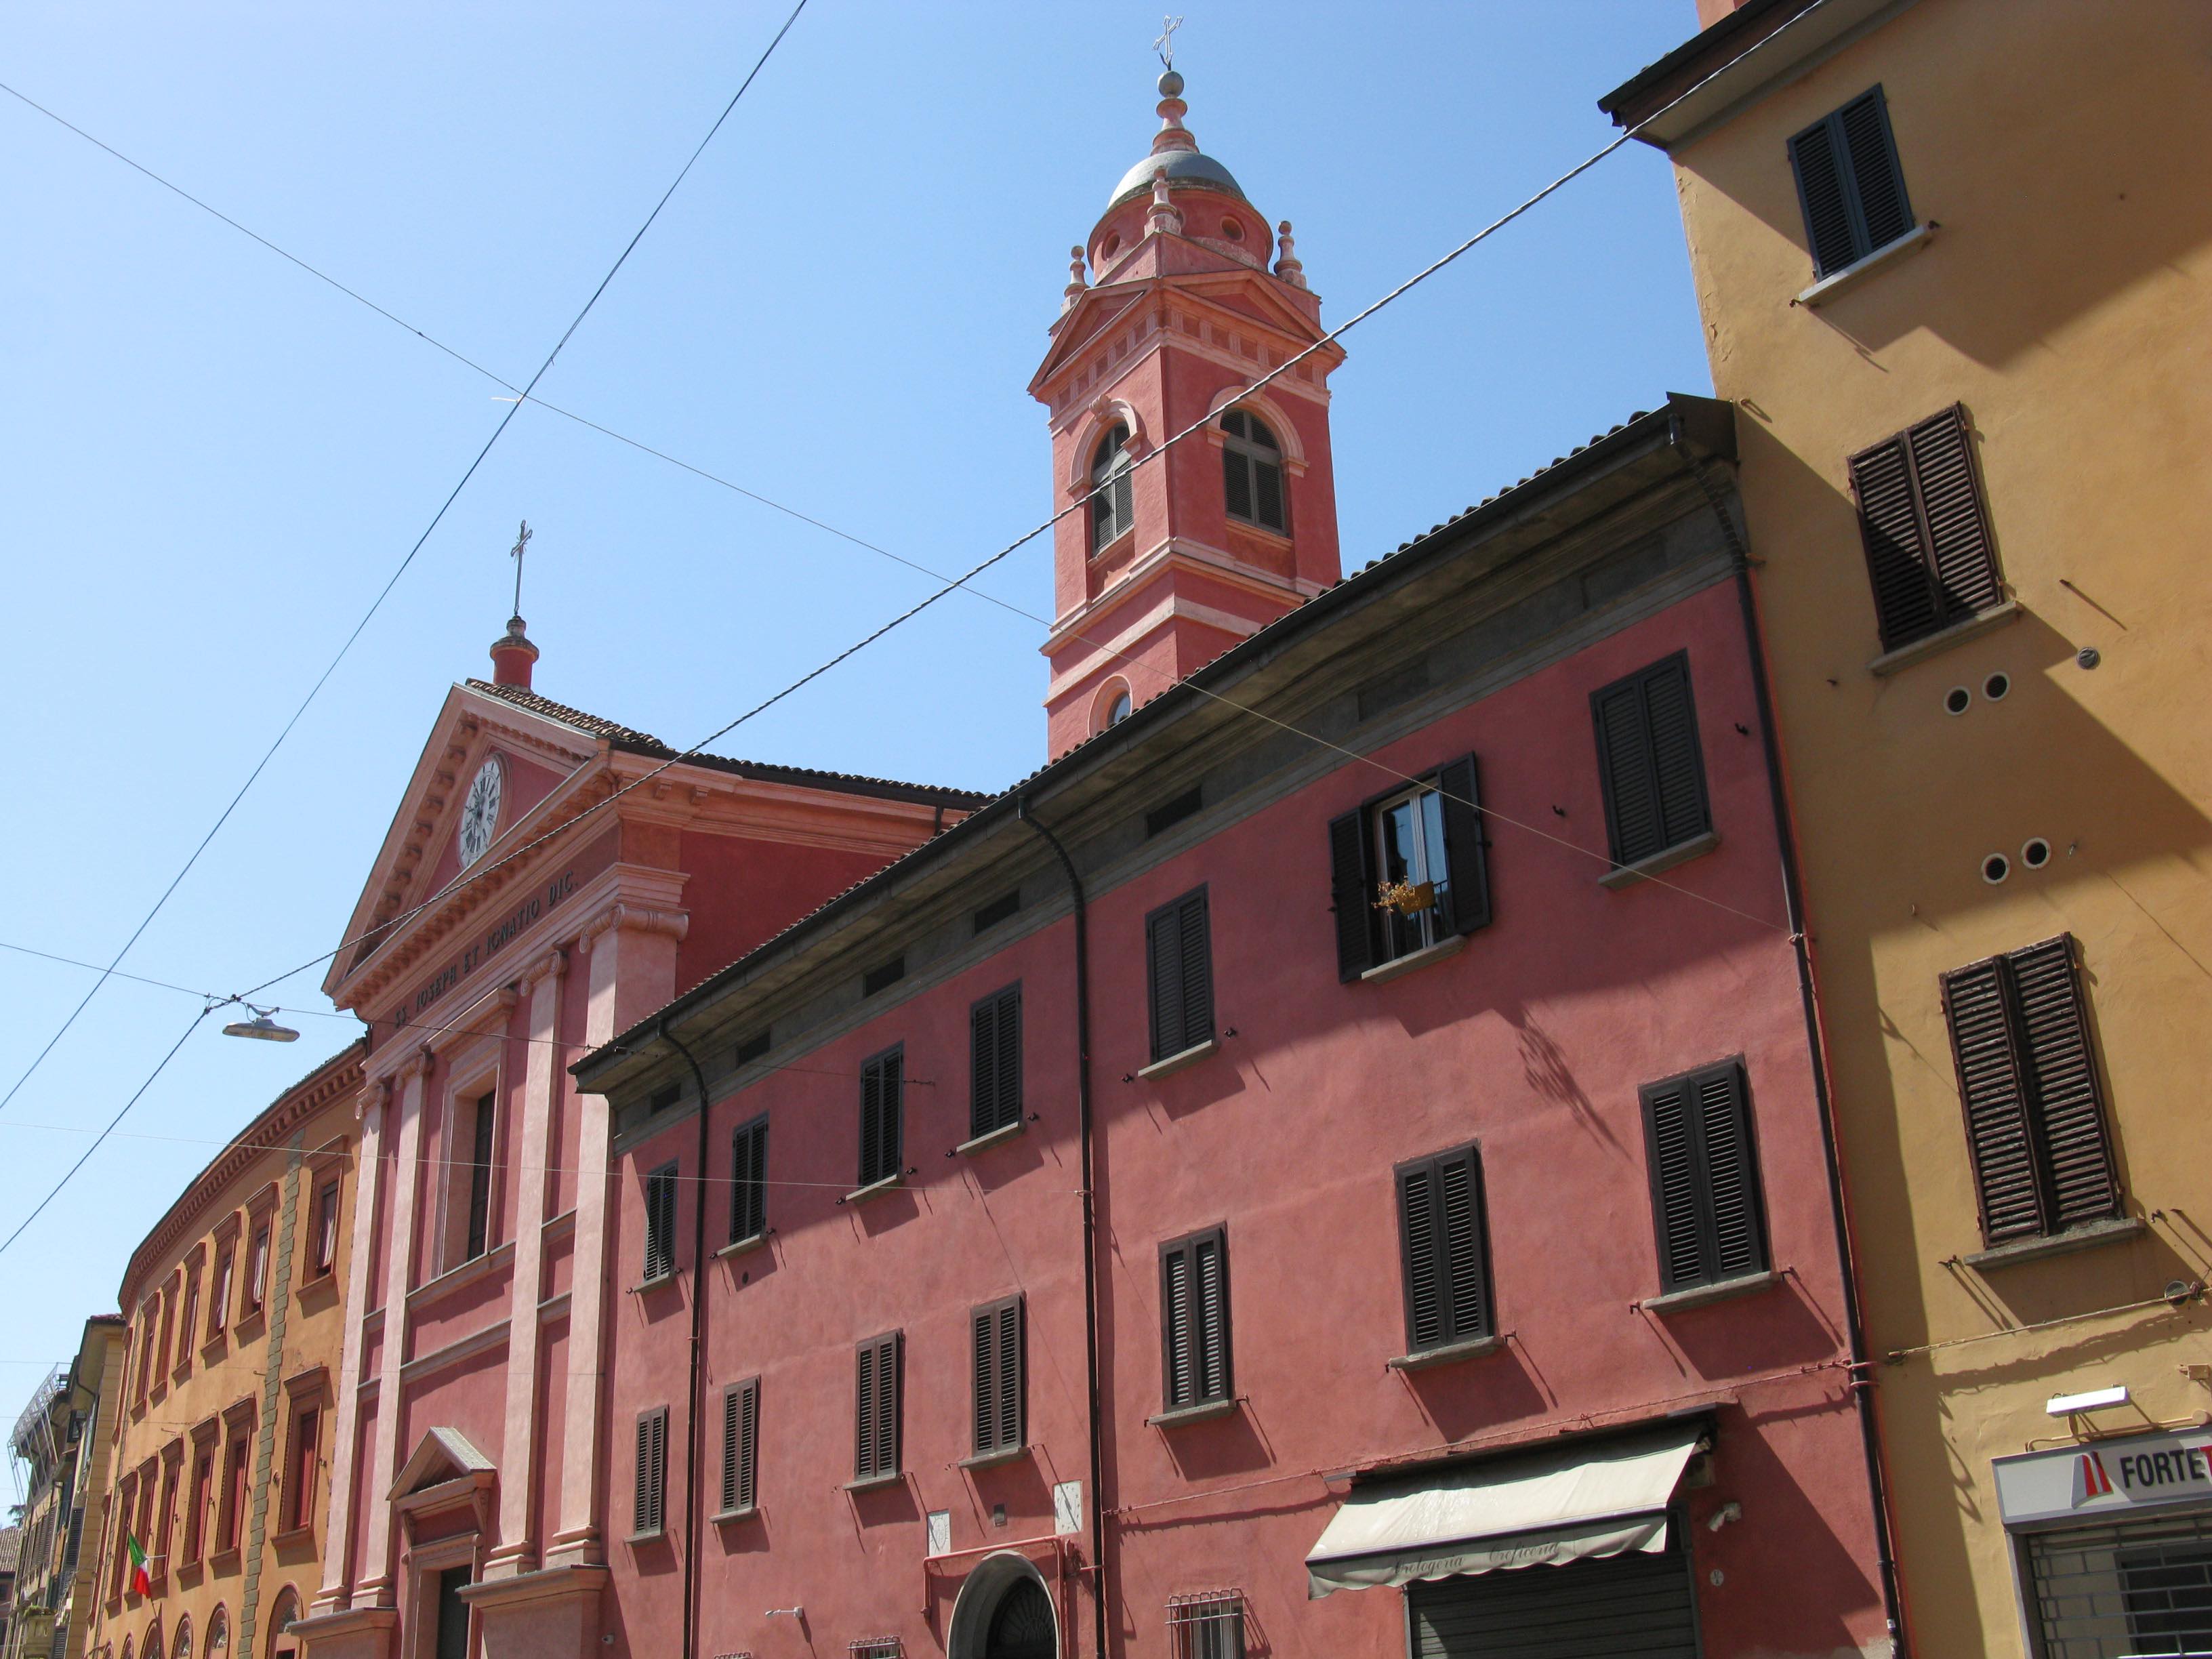 Campanile Chiesa dei SS. Giuseppe e Ignazio (campanile) - Bologna (BO) 